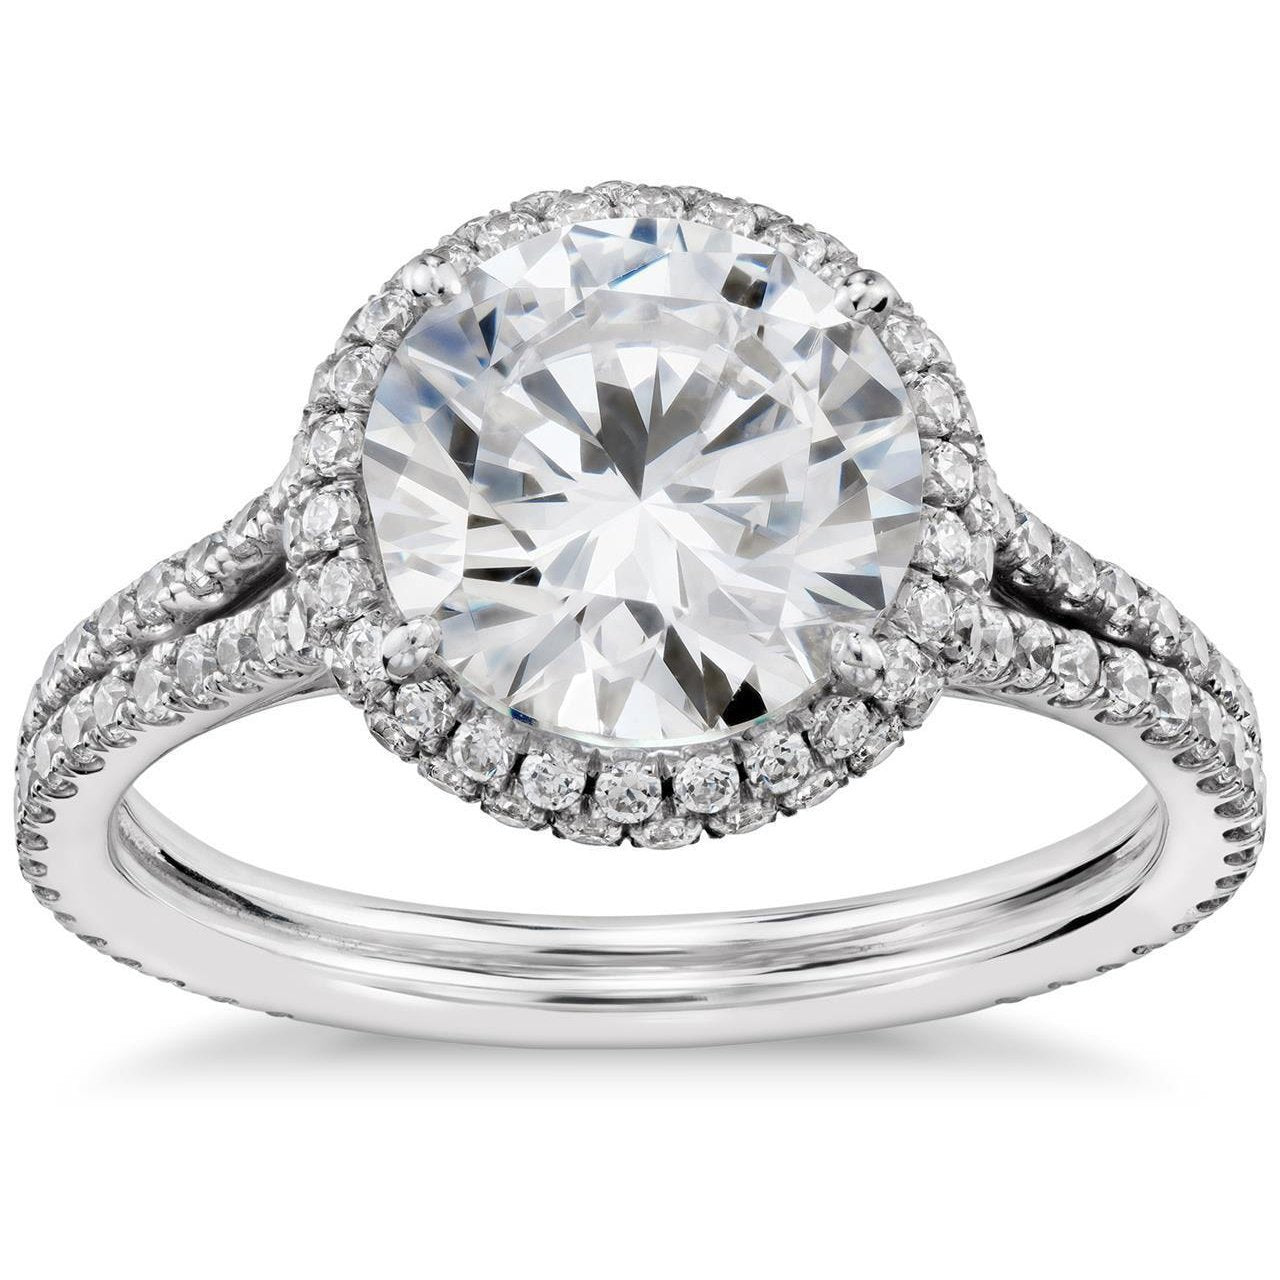 4.23 Carats Round Cut Natural Diamond Halo Engagement Ring